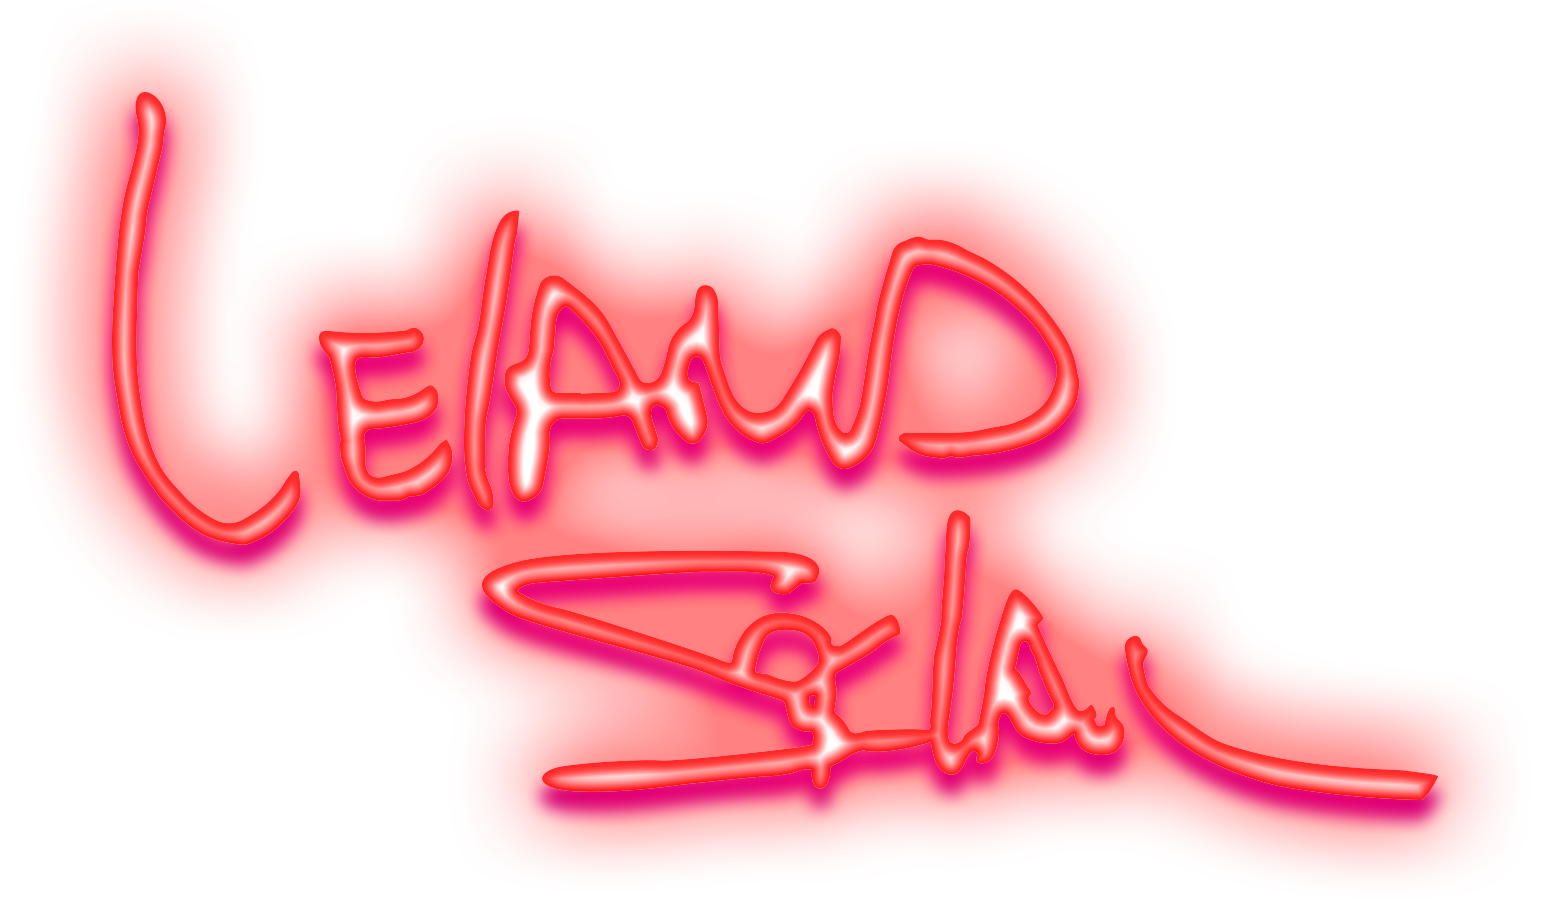 Leland Sklar's Digital Collectible Store